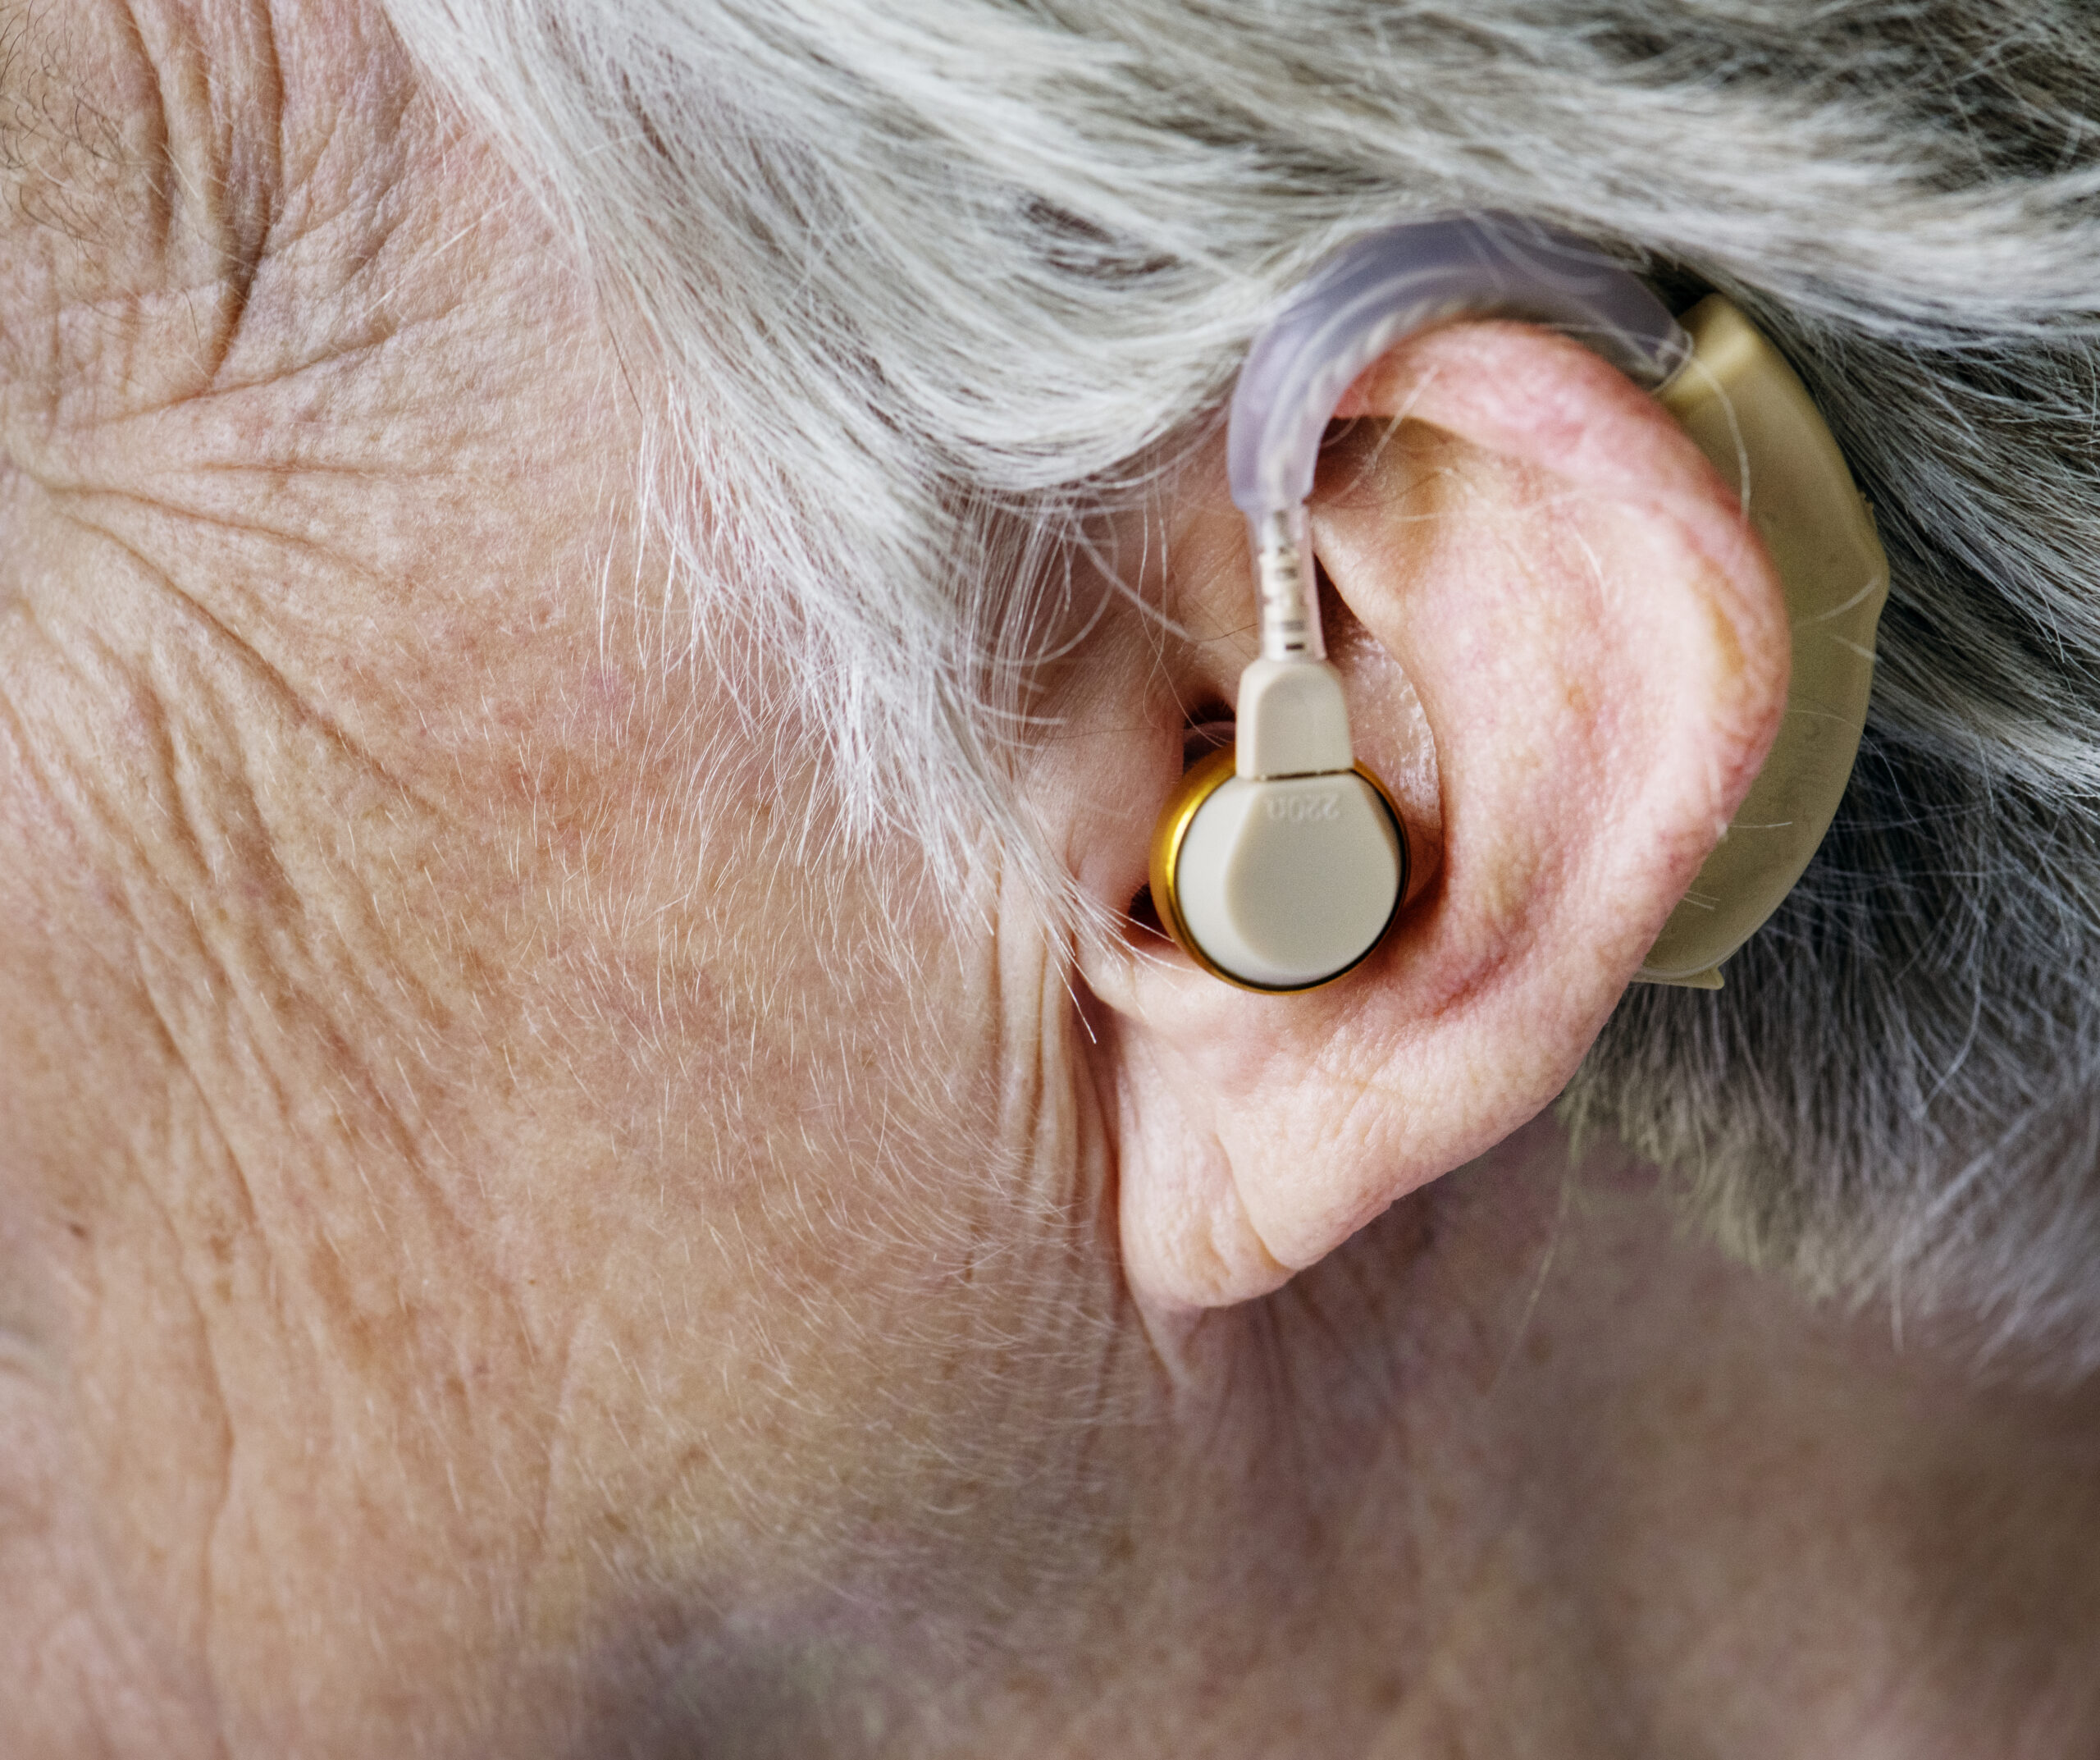 ndis consumable: hearing aid